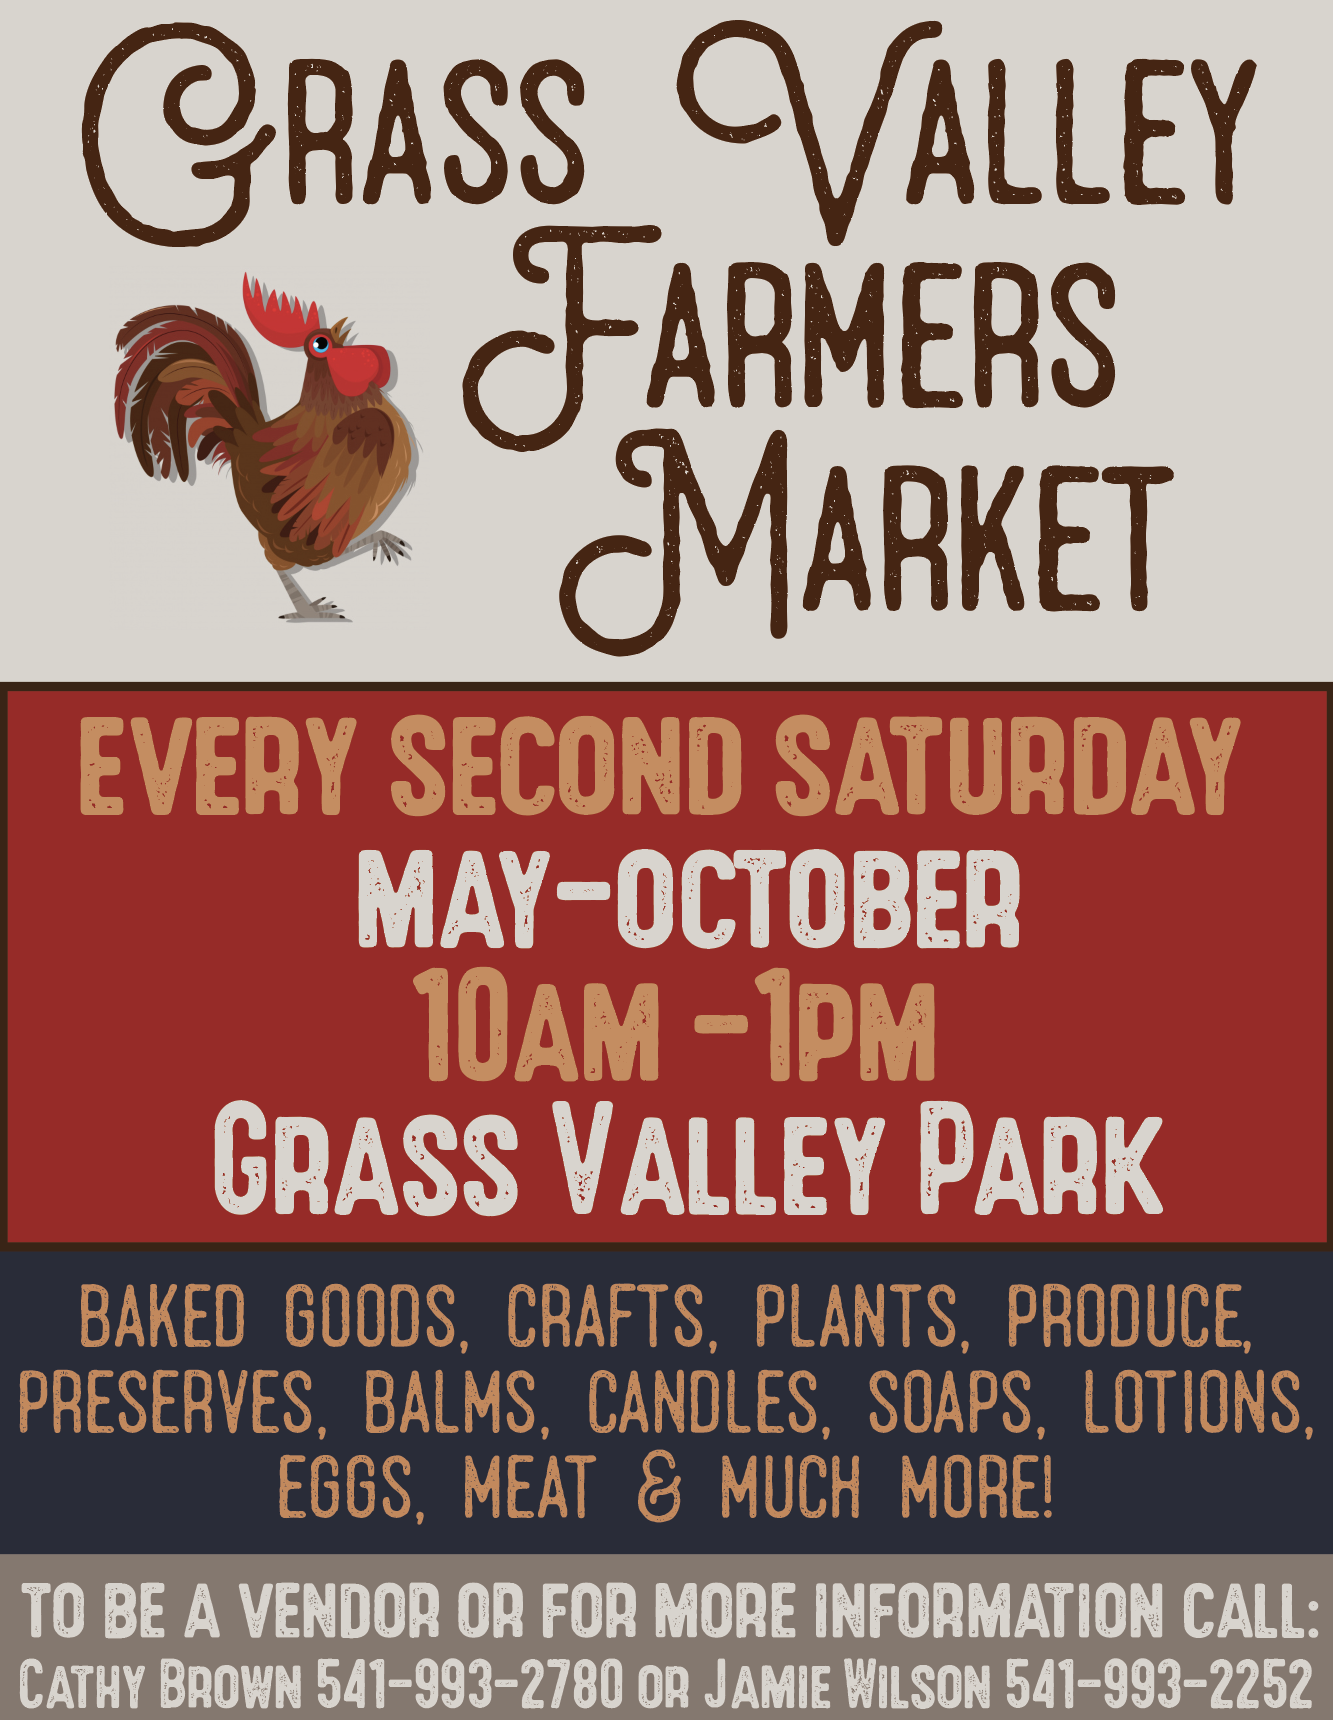 Grass Valley Farmers Market